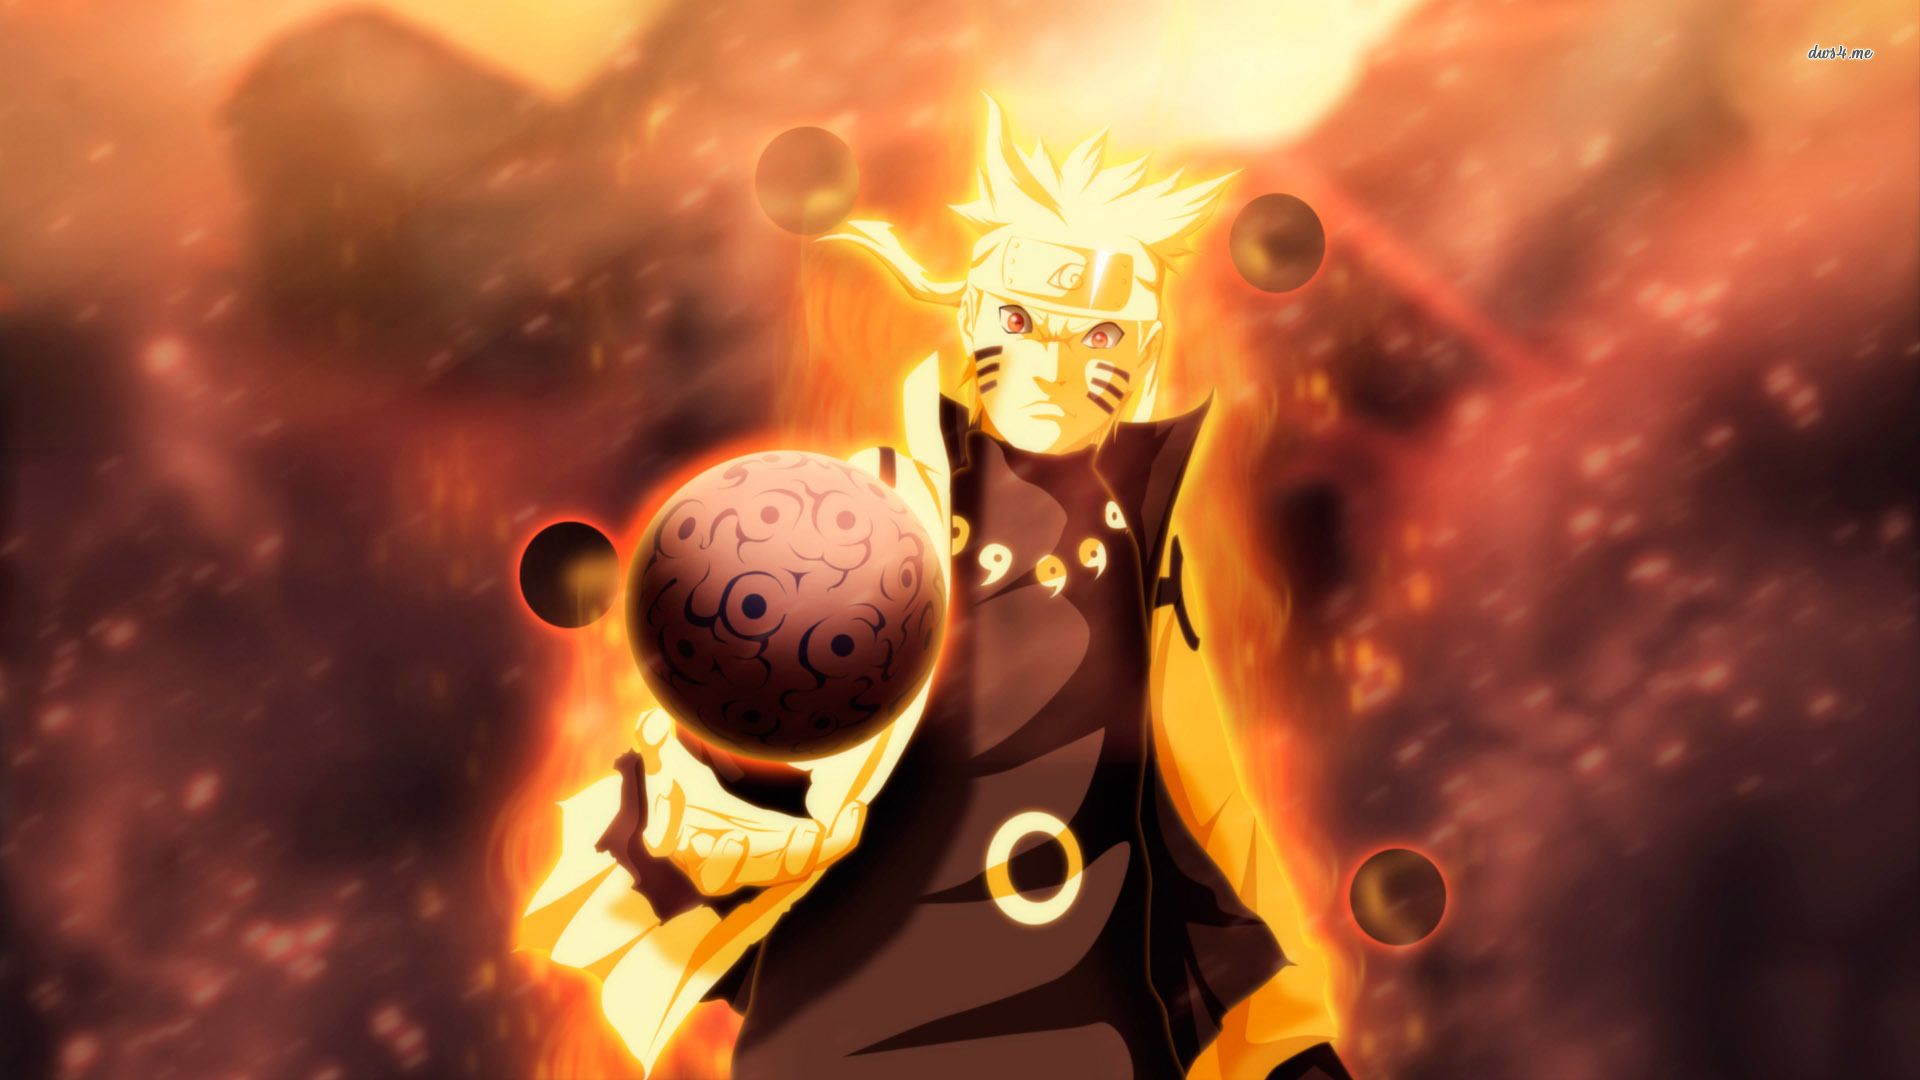 Top 999+ Naruto 4k Wallpaper Full HD, 4K✓Free to Use